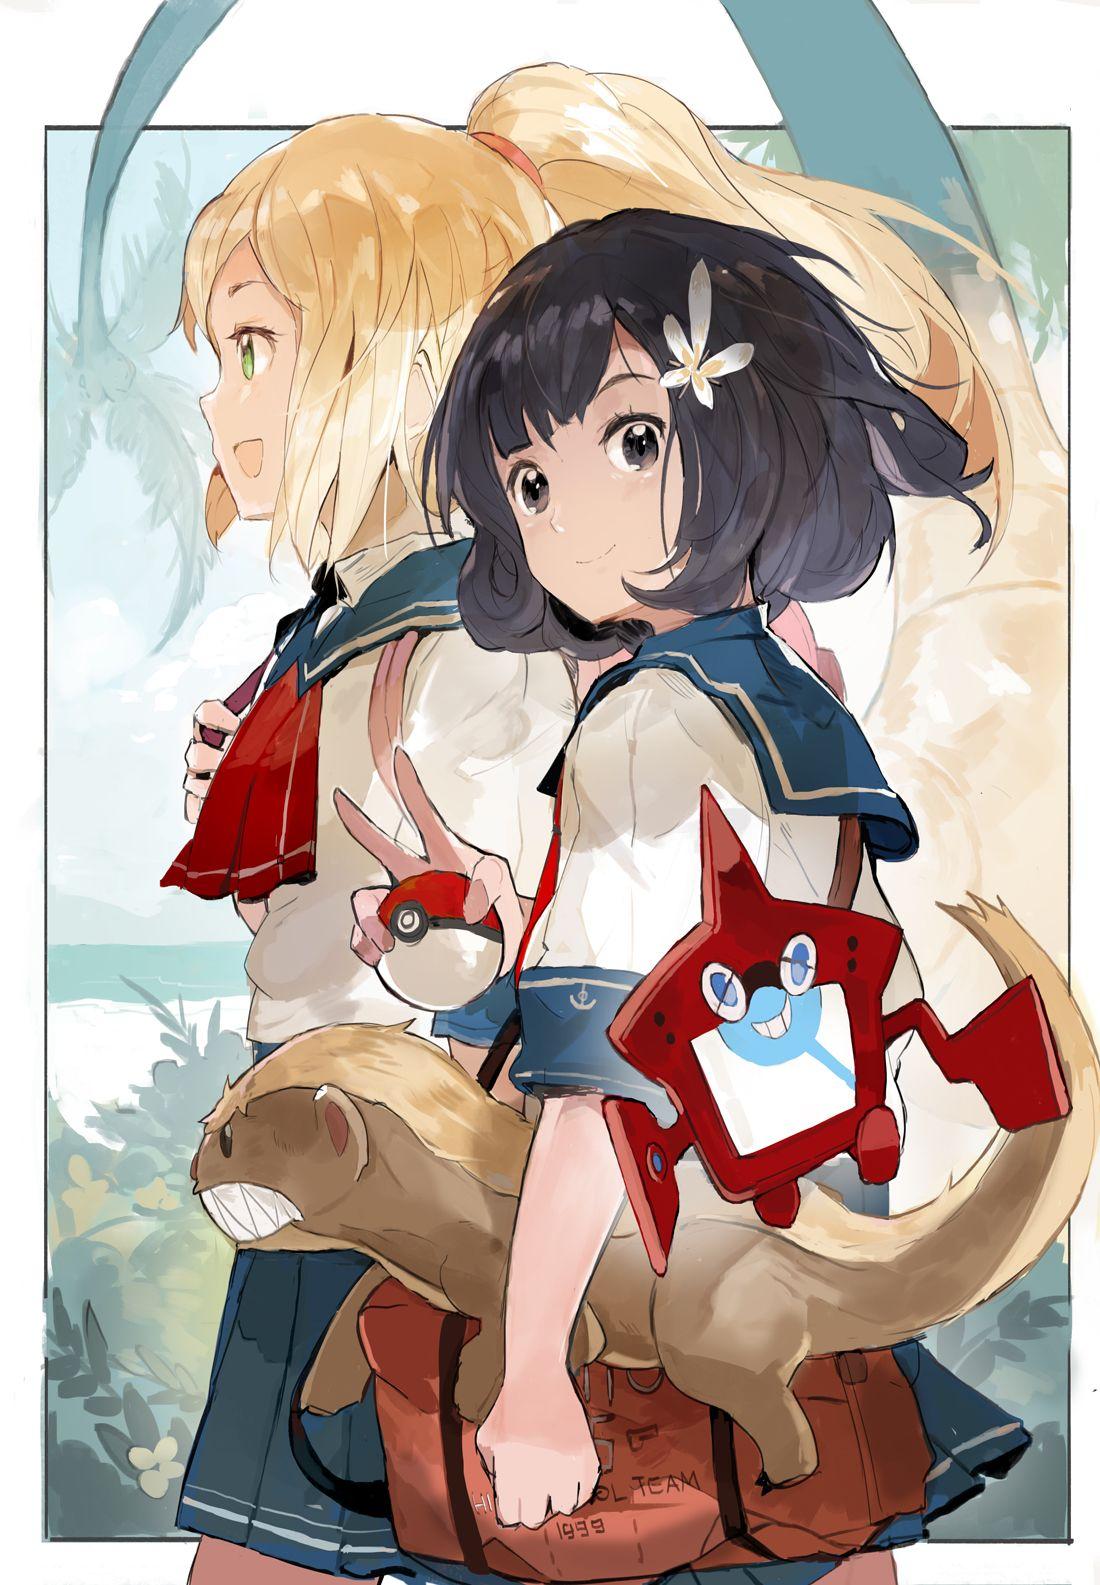 Pokémon Sun & Moon Mobile Wallpaper Anime Image